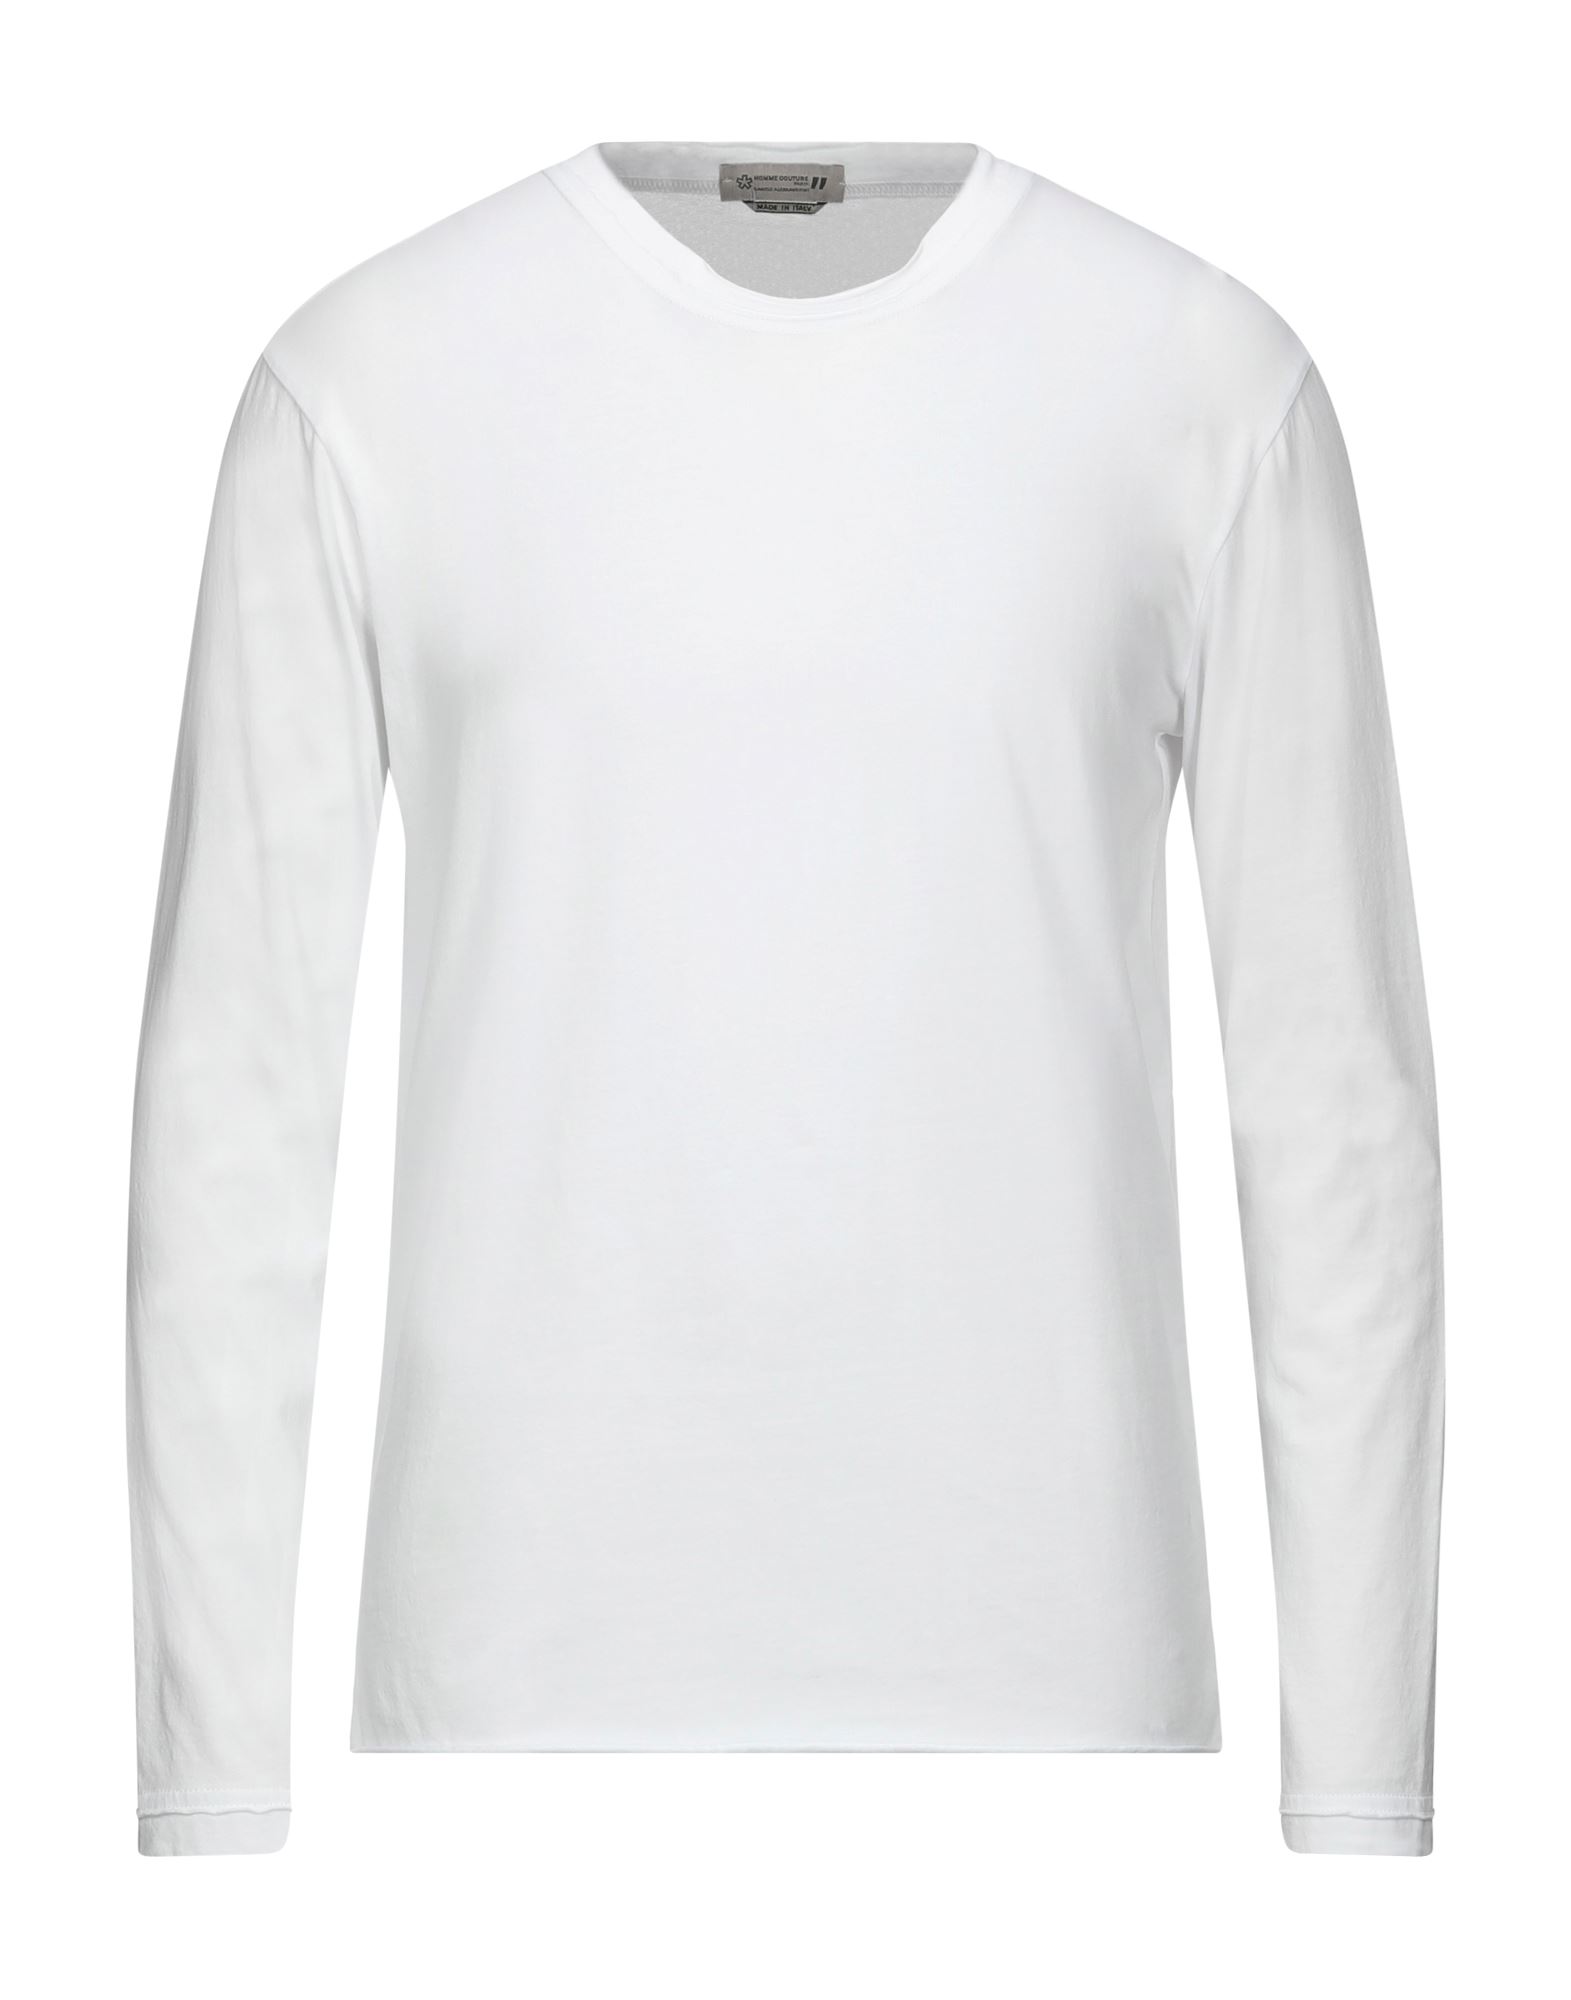 DANIELE ALESSANDRINI HOMME T-shirts - Item 12536729